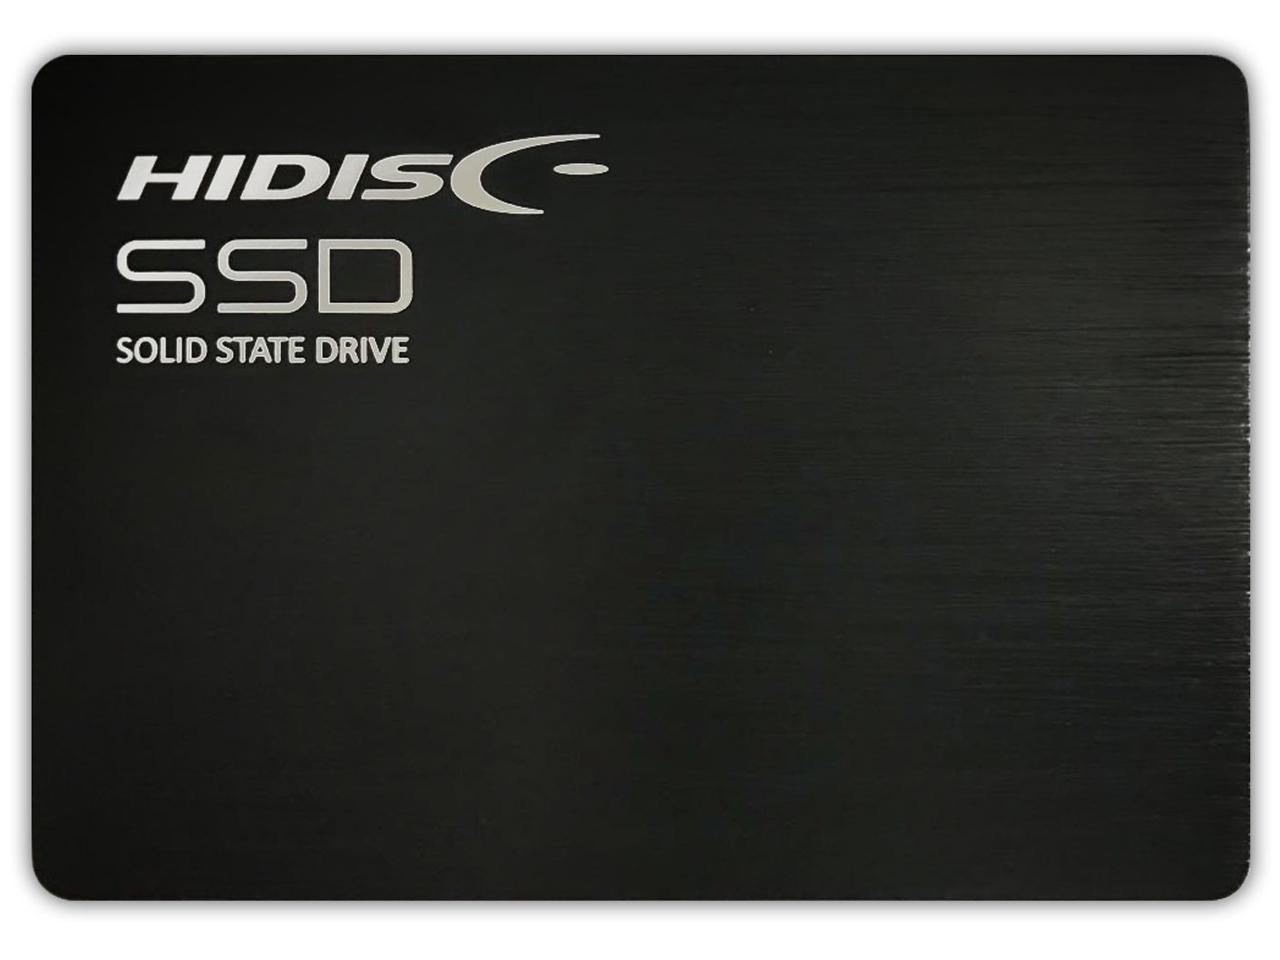 2.5C`SATAڑ SSD 1TB ubN(HDSSD1TJP3) HI DISC